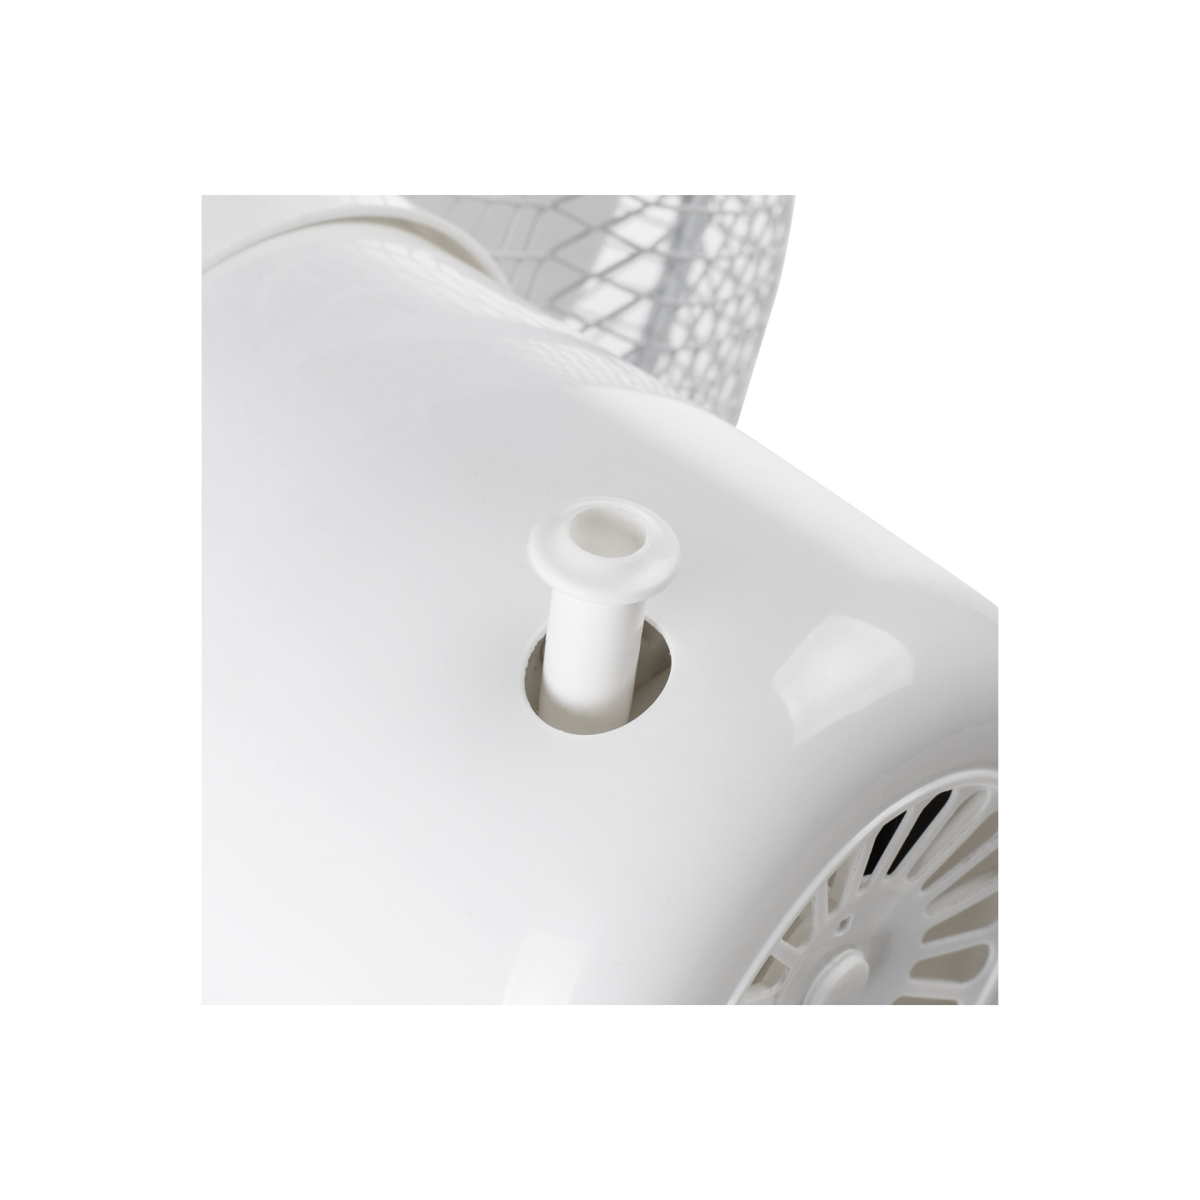 Tristar VE-5930 Desk fan Number of speeds 3 40 W Oscillation Diameter 30 cm White